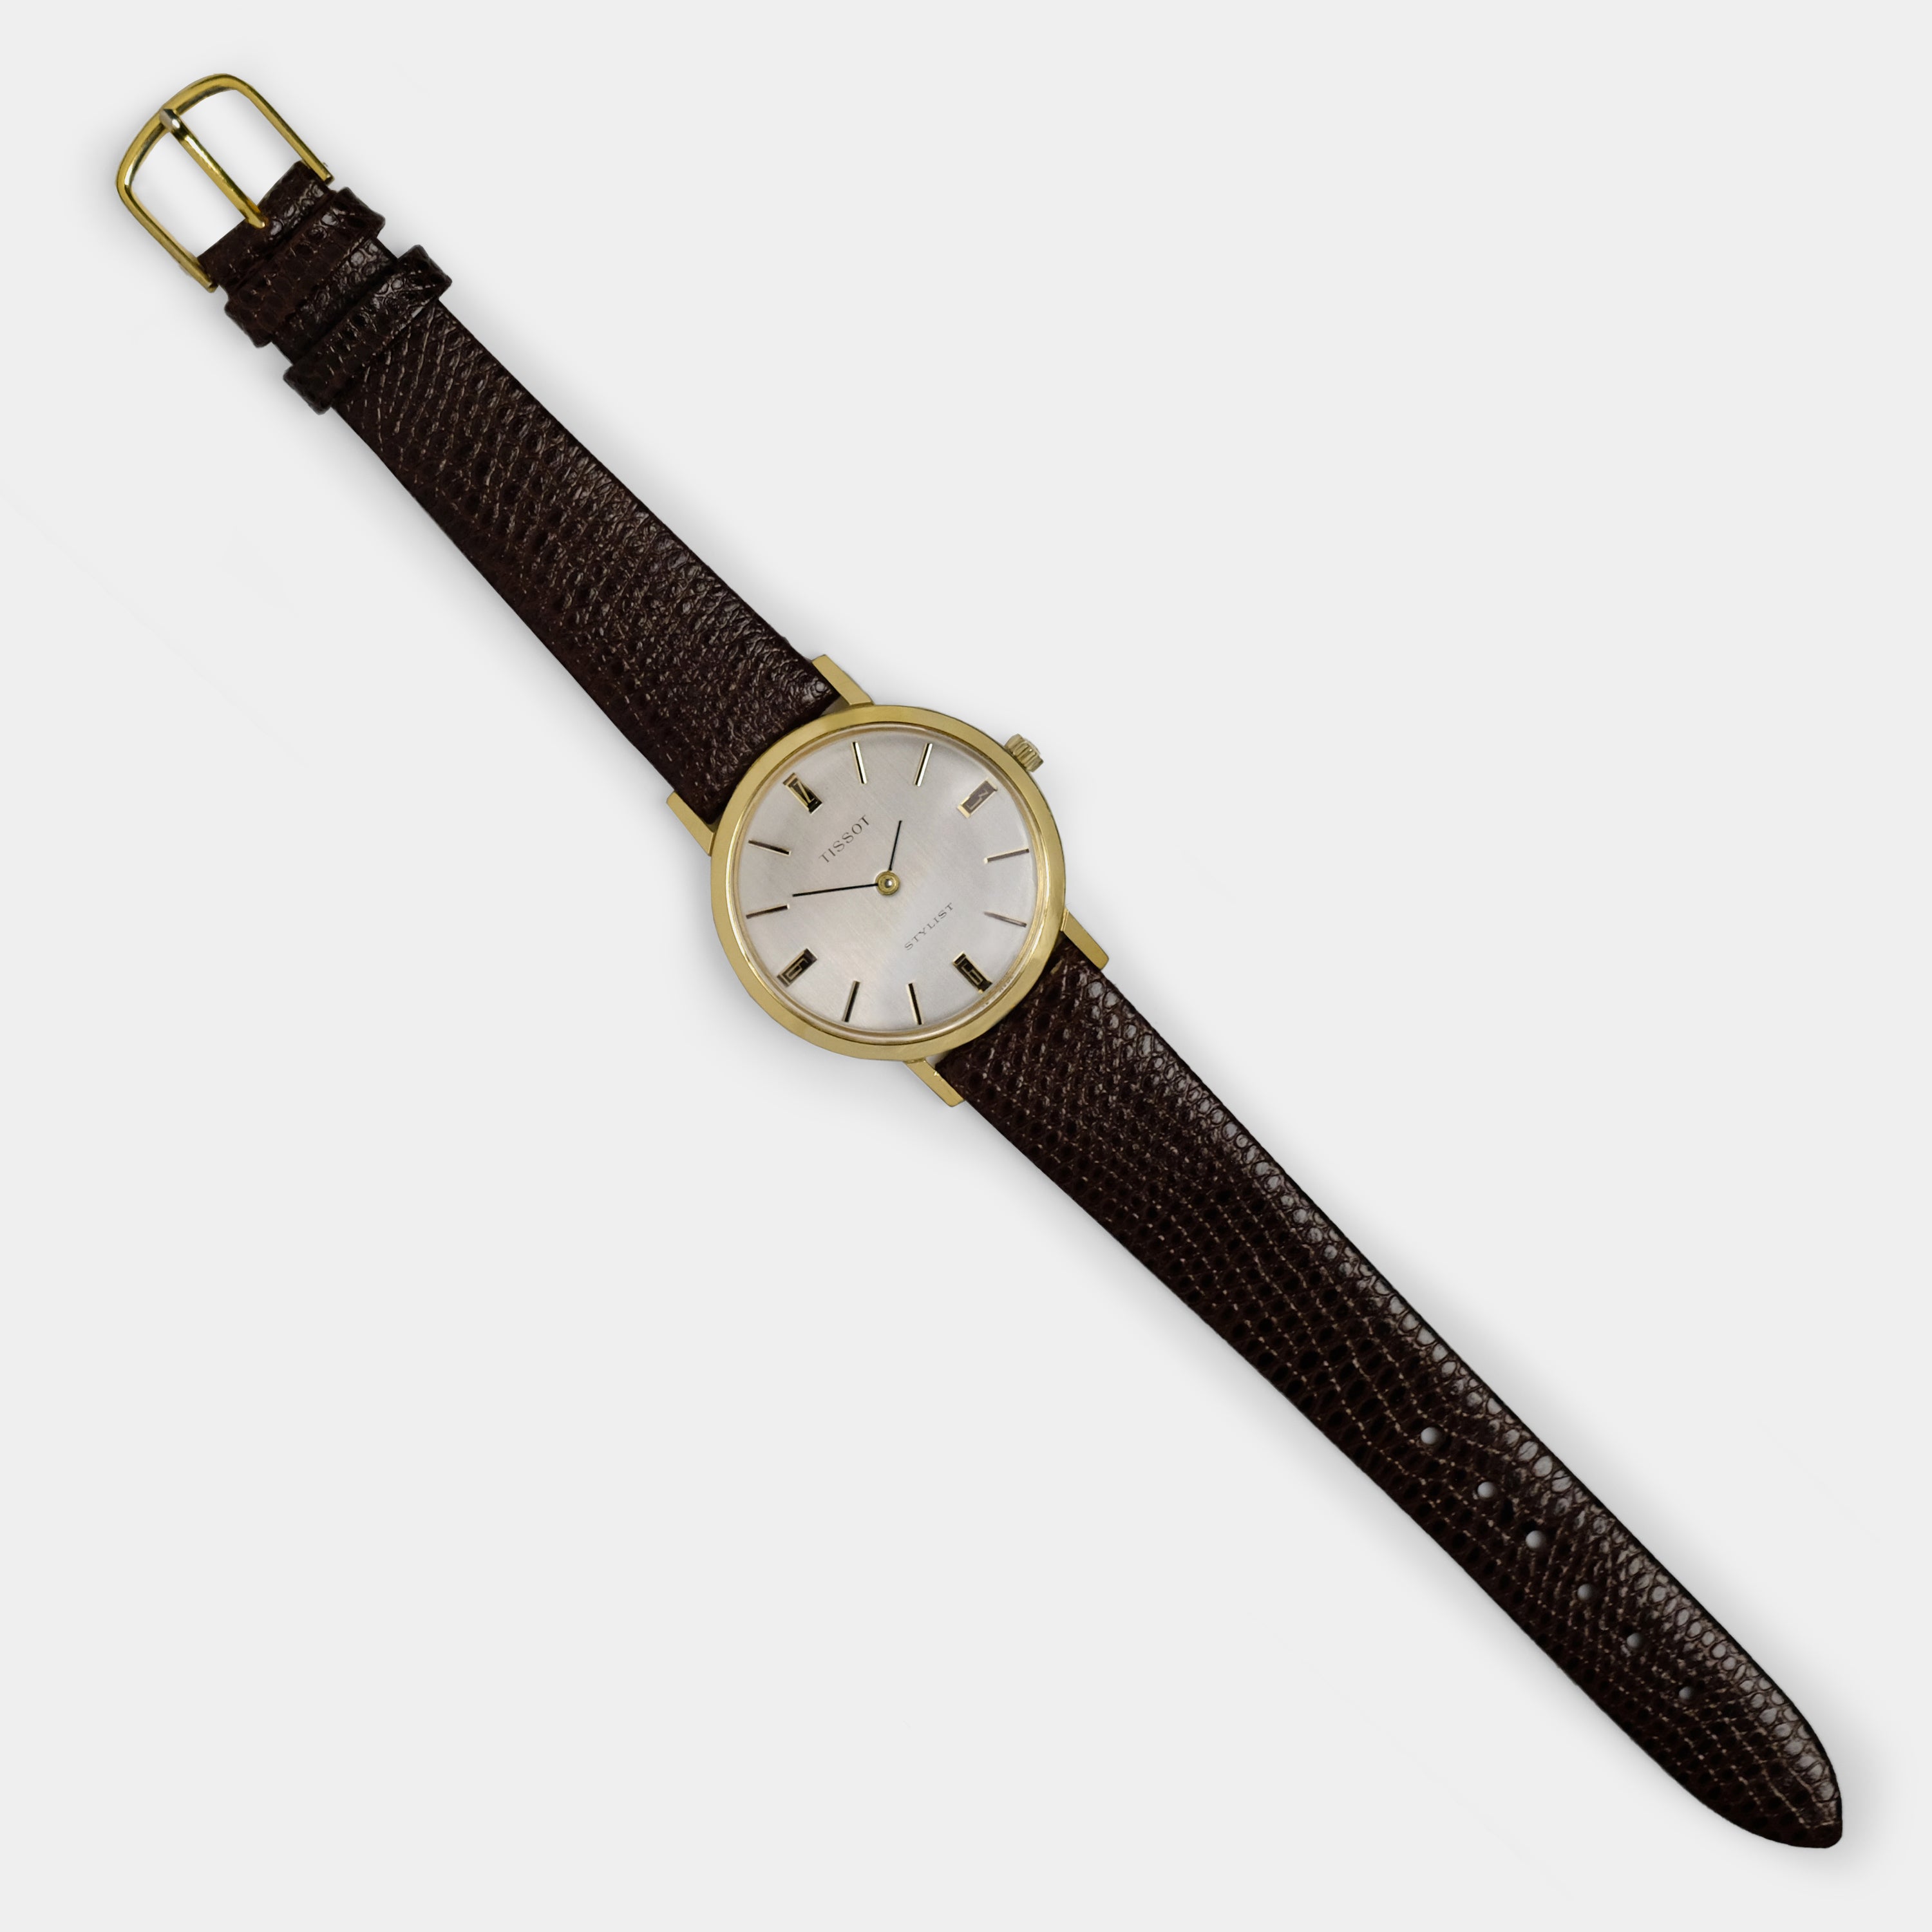 Tissot Stylist Time-Only Manual-Wind Circa 1960s Wristwatch